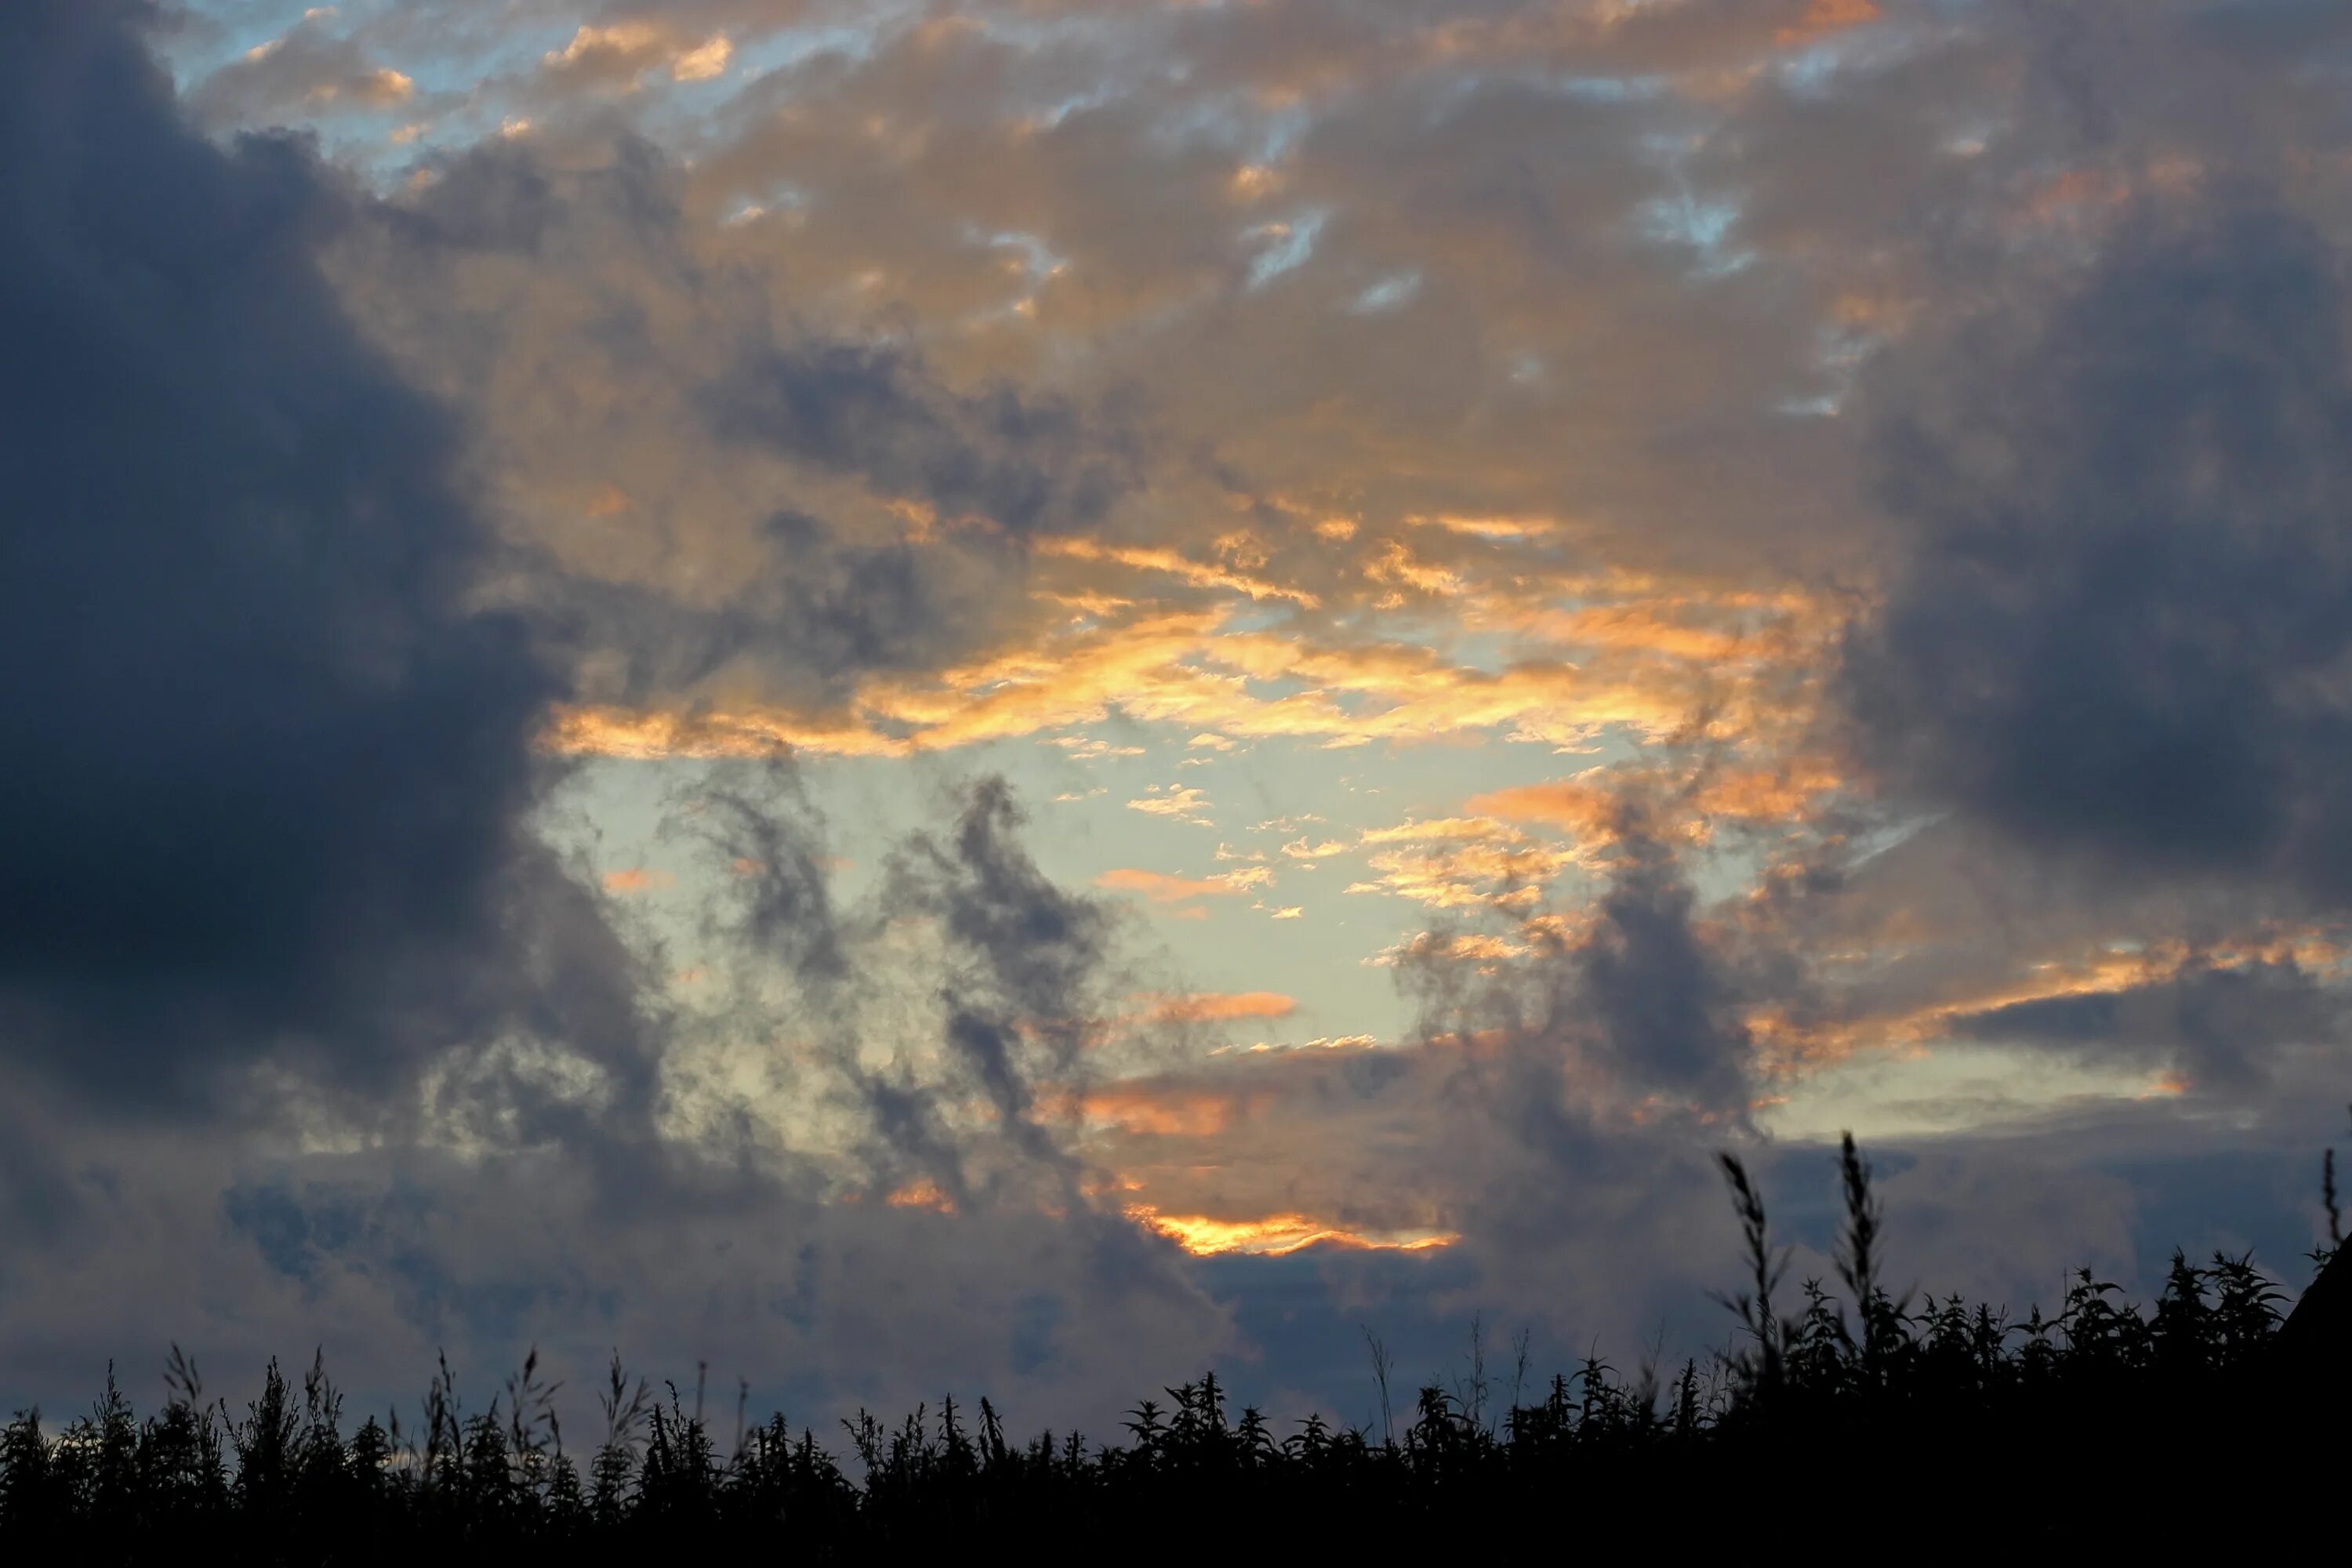 Tunes летели облака. Облака фотоконкурс. Праздник пролетающих облаков 27 августа. Летящие облака фото. MC bax в небе тучи пролетают.